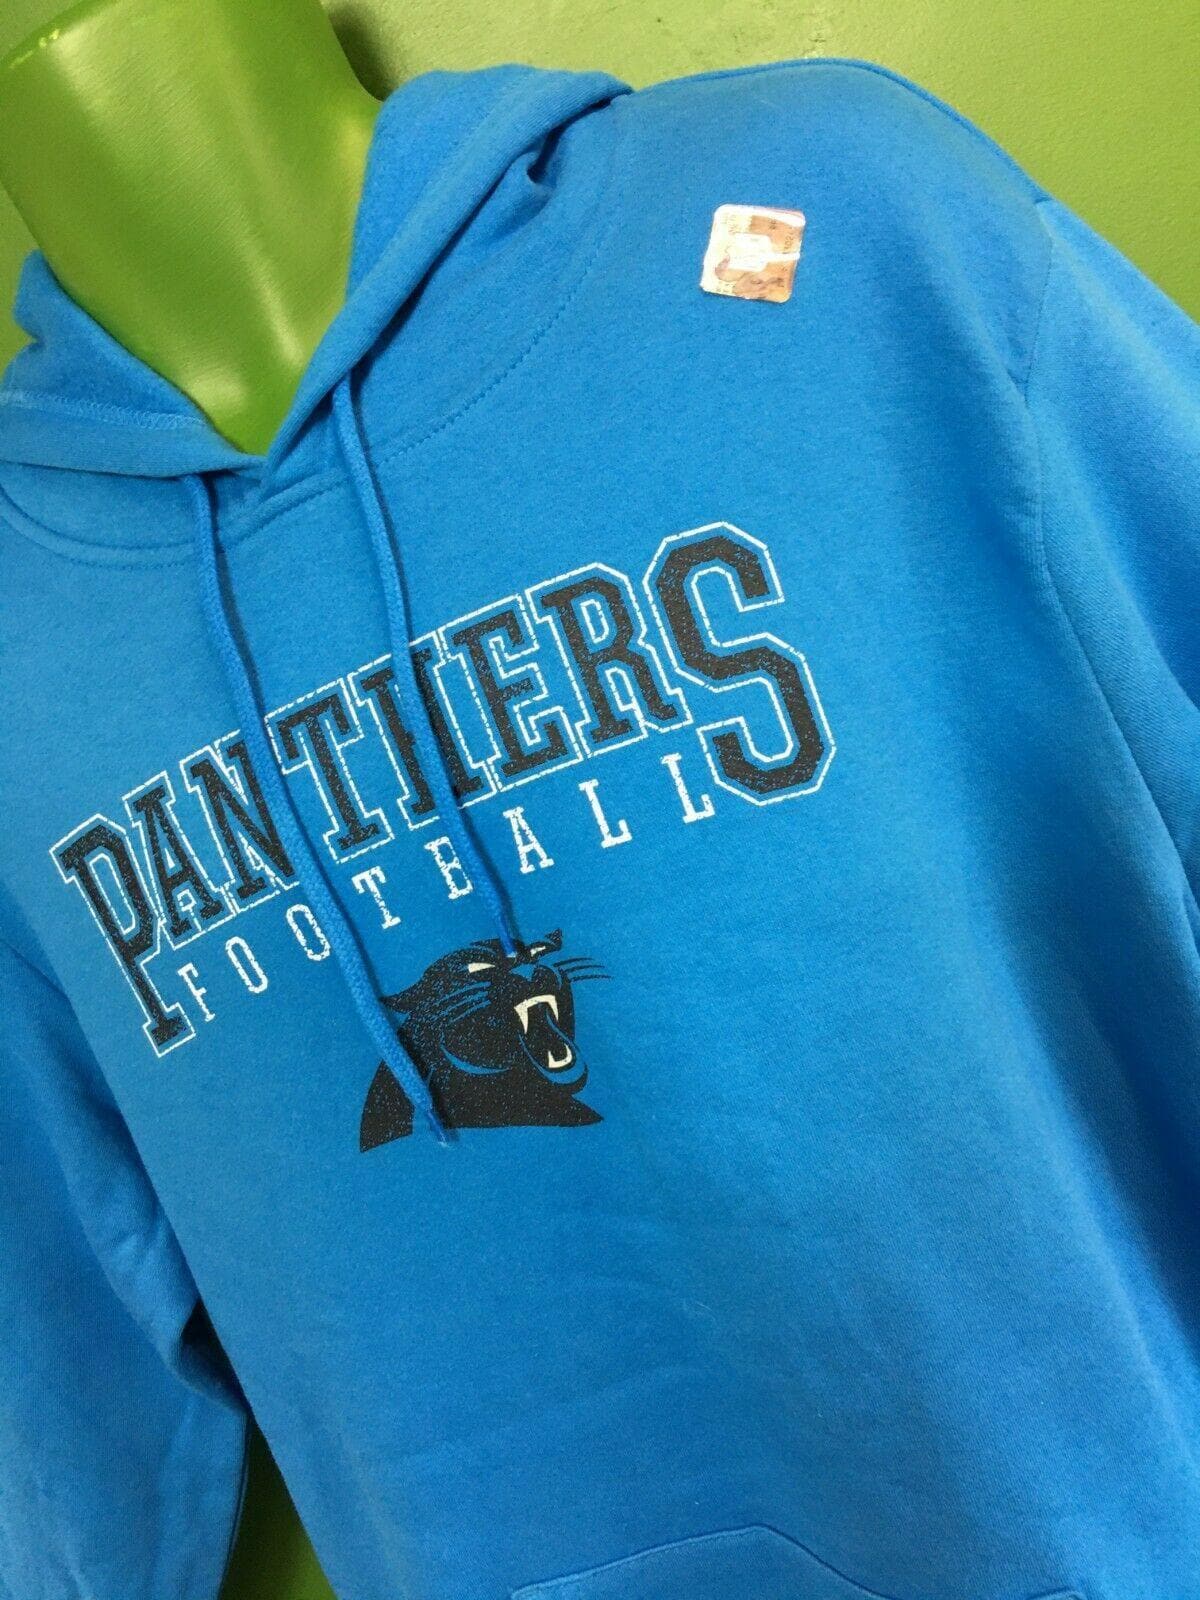 NFL Carolina Panthers Bright Blue Hoodie Men's Large NWT